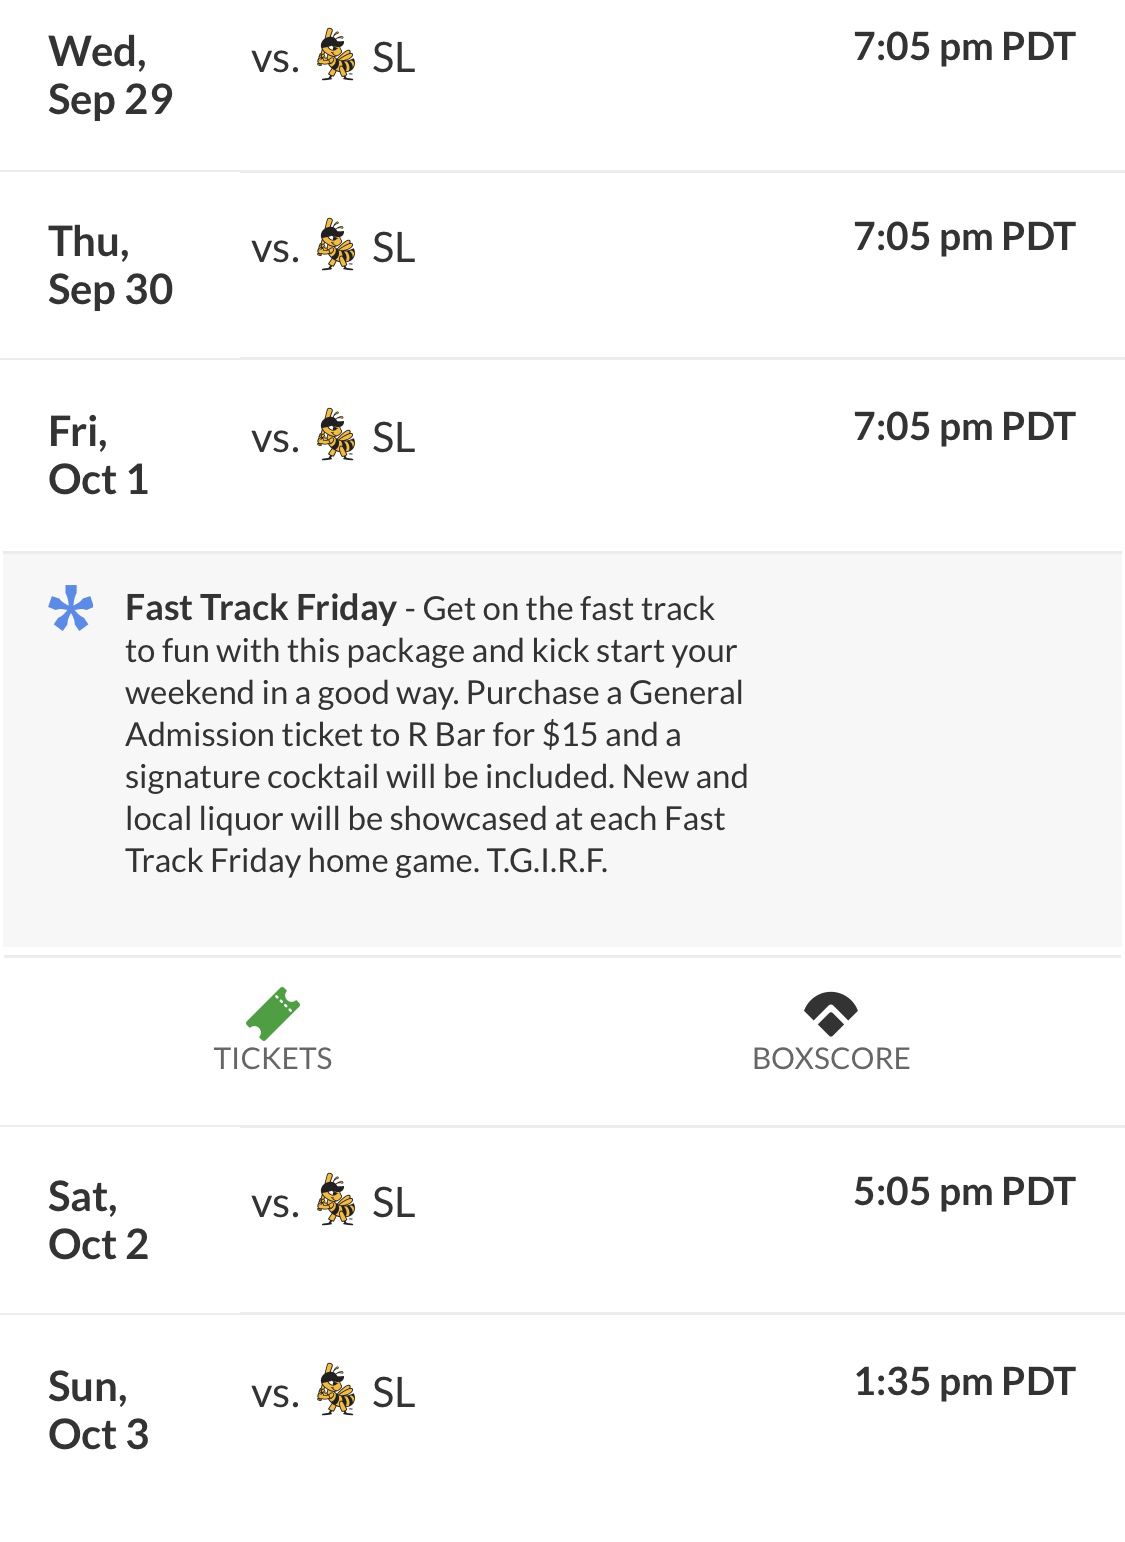 Tacoma Rainiers - Tickets for last game of Season